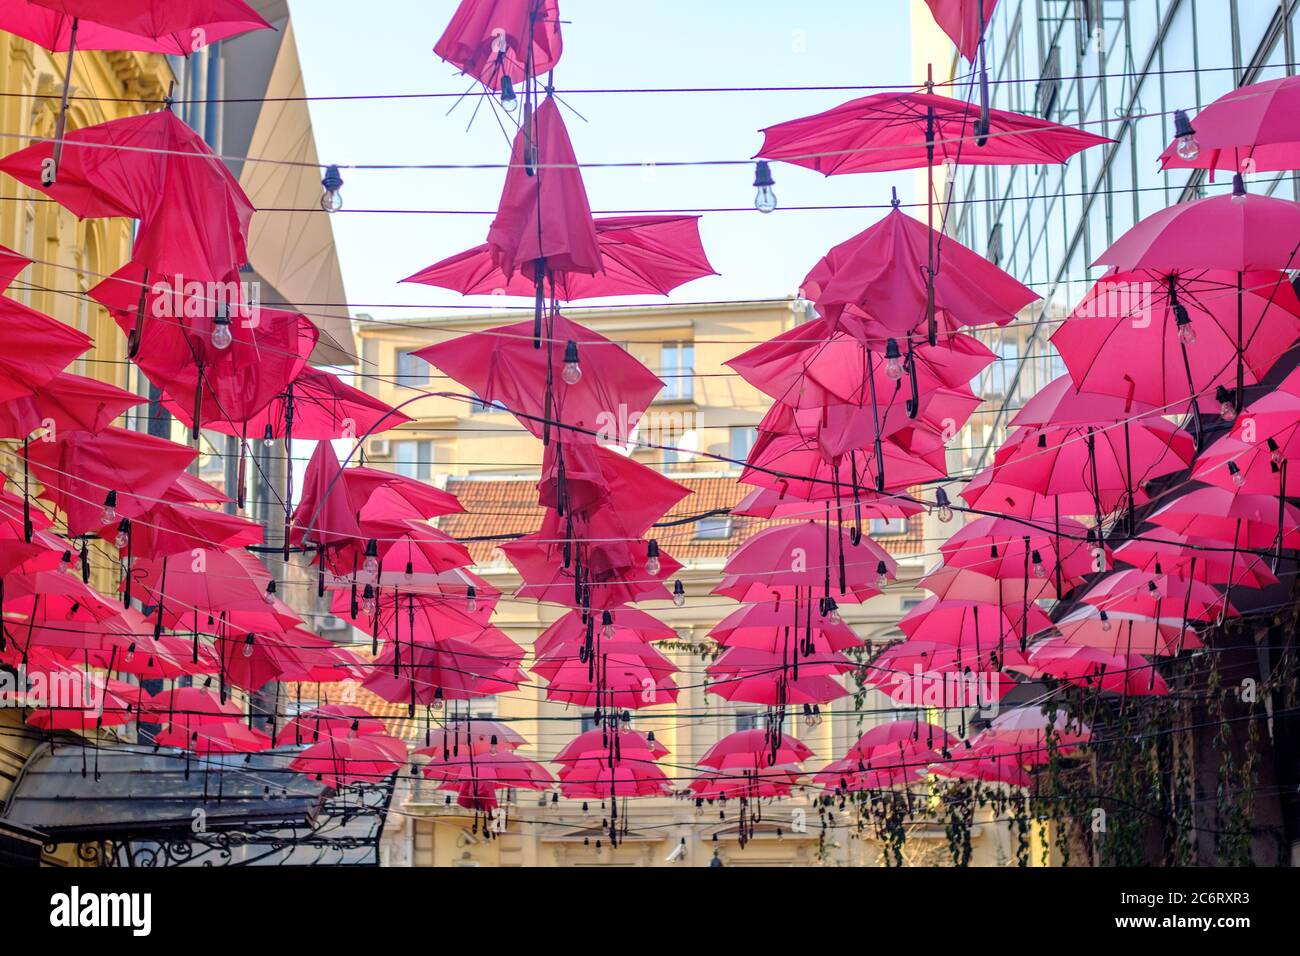 Belgrade / Serbia - December 2, 2018: Red umbrellas above the open-air restaurant in King Peter street, in old bohemian part of Serbian capital Belgra Stock Photo